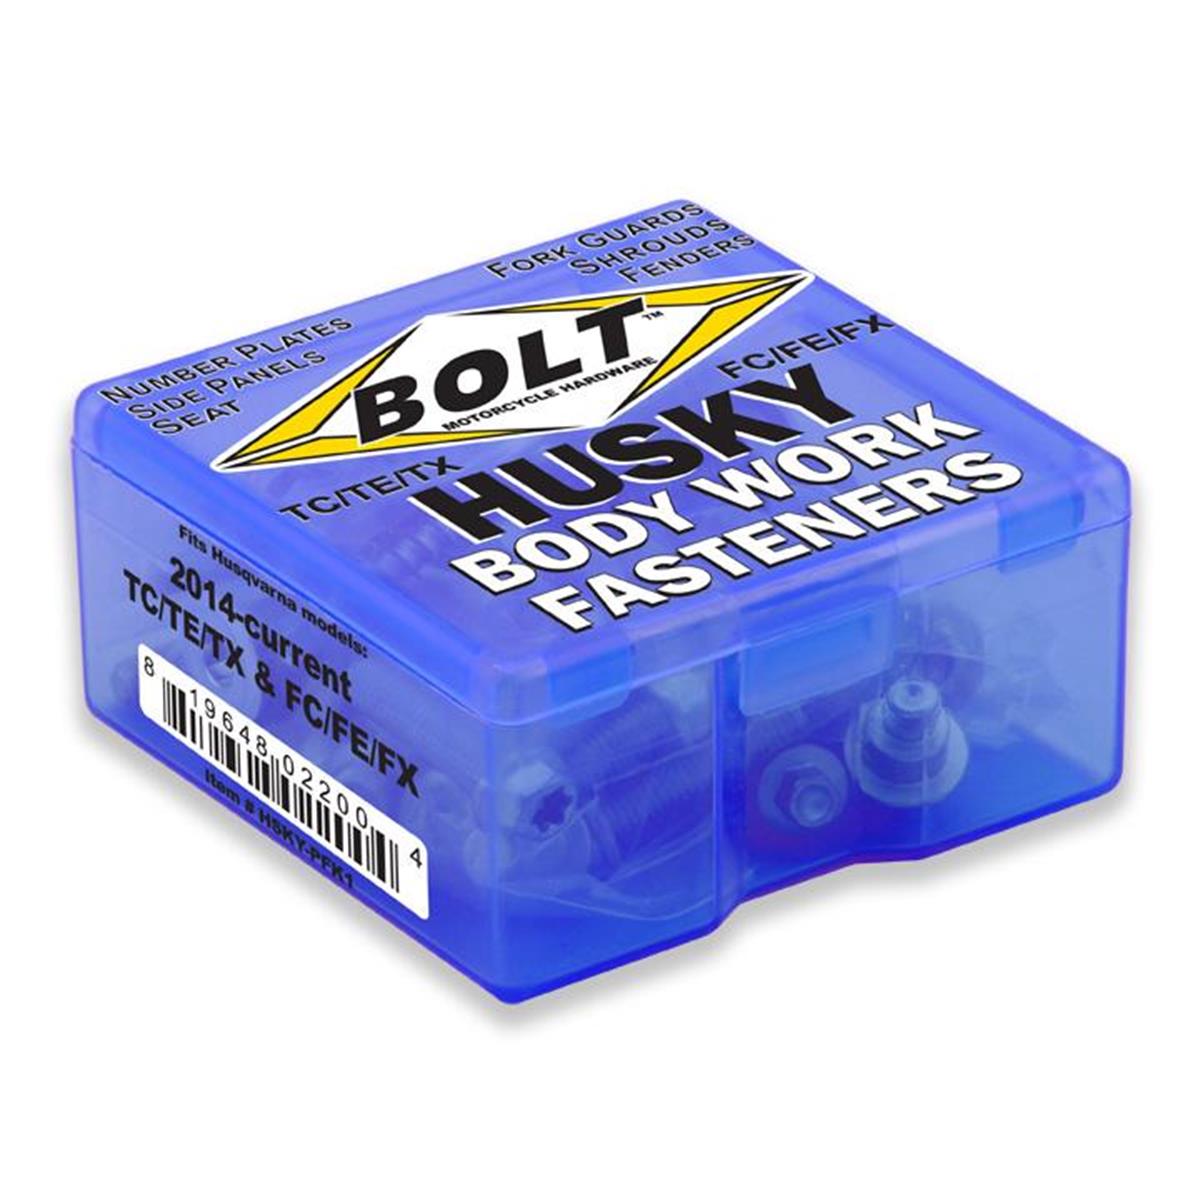 Bolt Fastener Kit  for Plastics, Husqvarna 14-